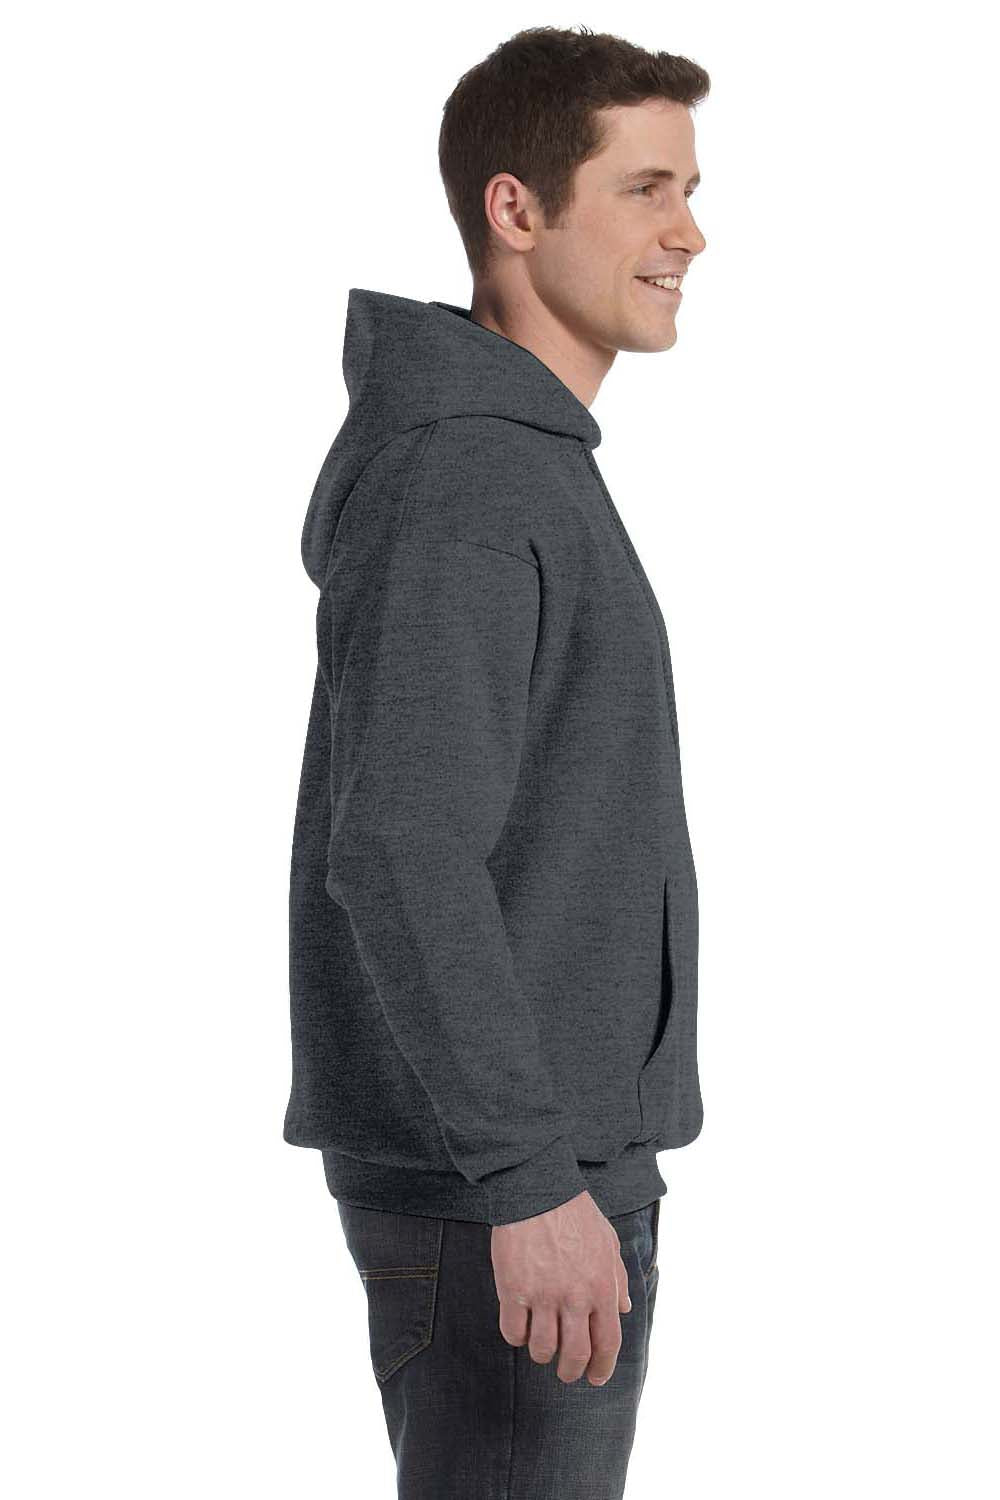 Hanes P170 Mens EcoSmart Print Pro XP Hooded Sweatshirt Hoodie Heather Charcoal Grey Side